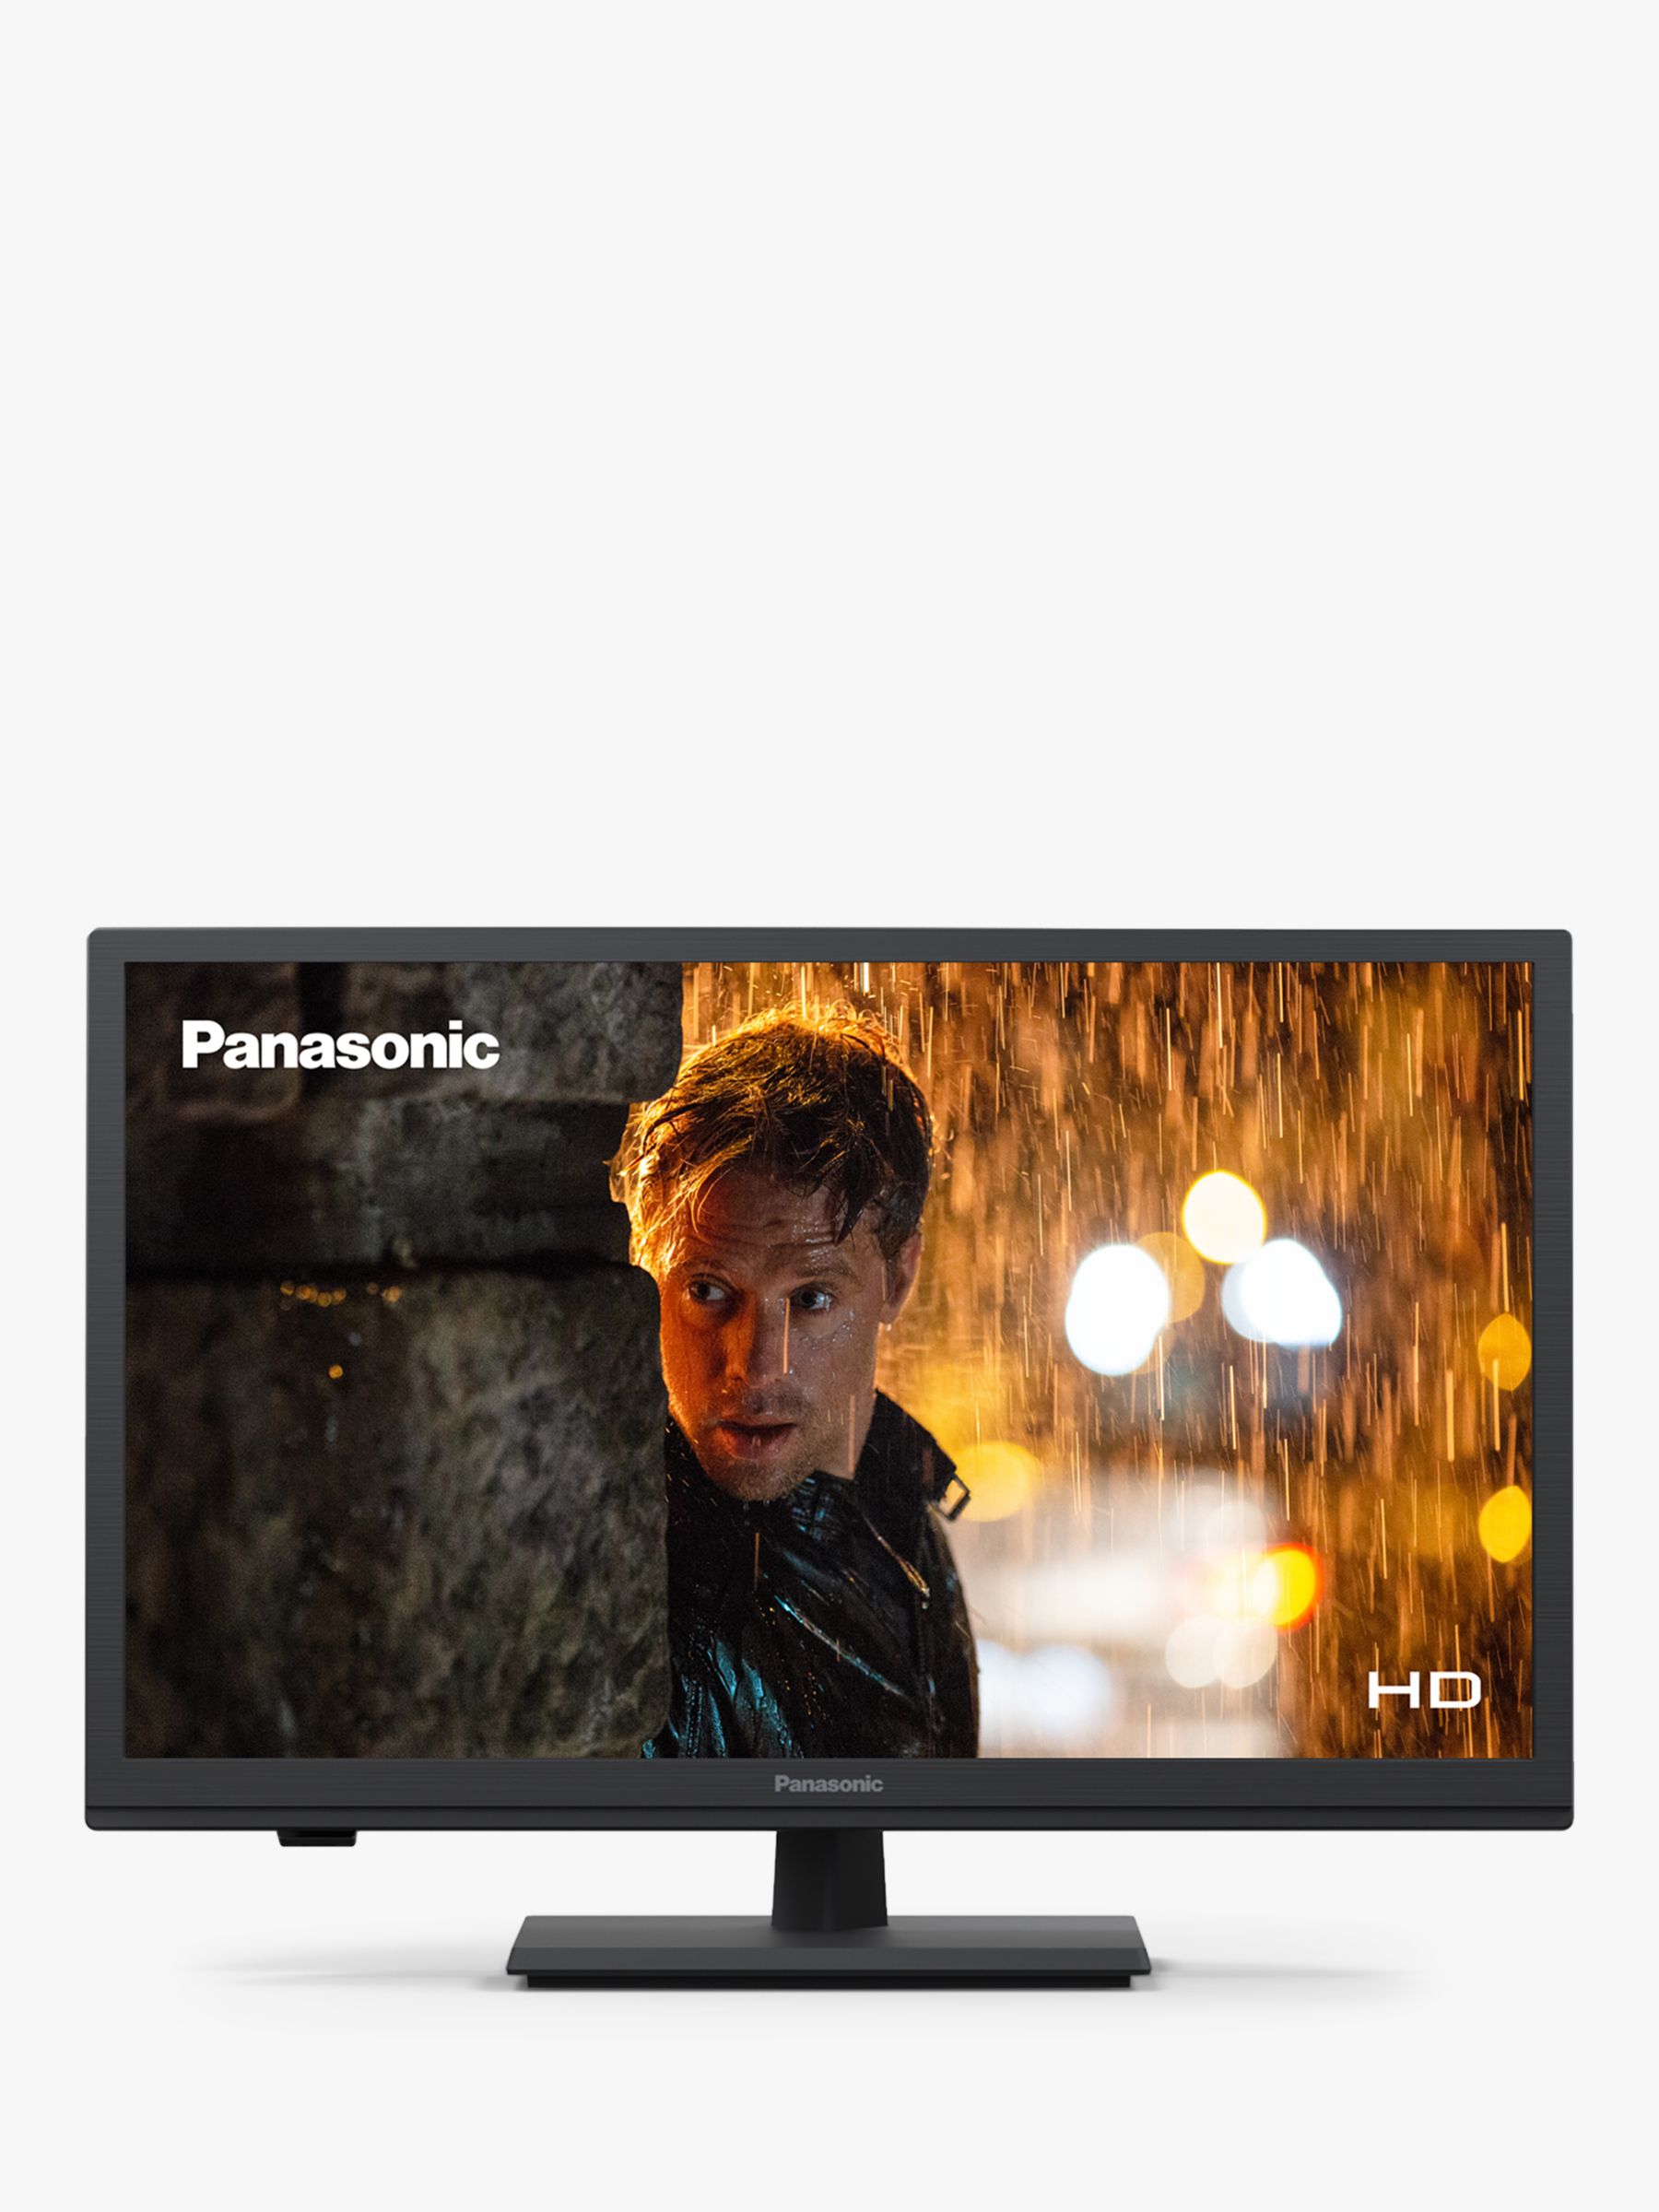 Panasonic TX-24G310B HD Ready 720p TV, 24 inch with Black